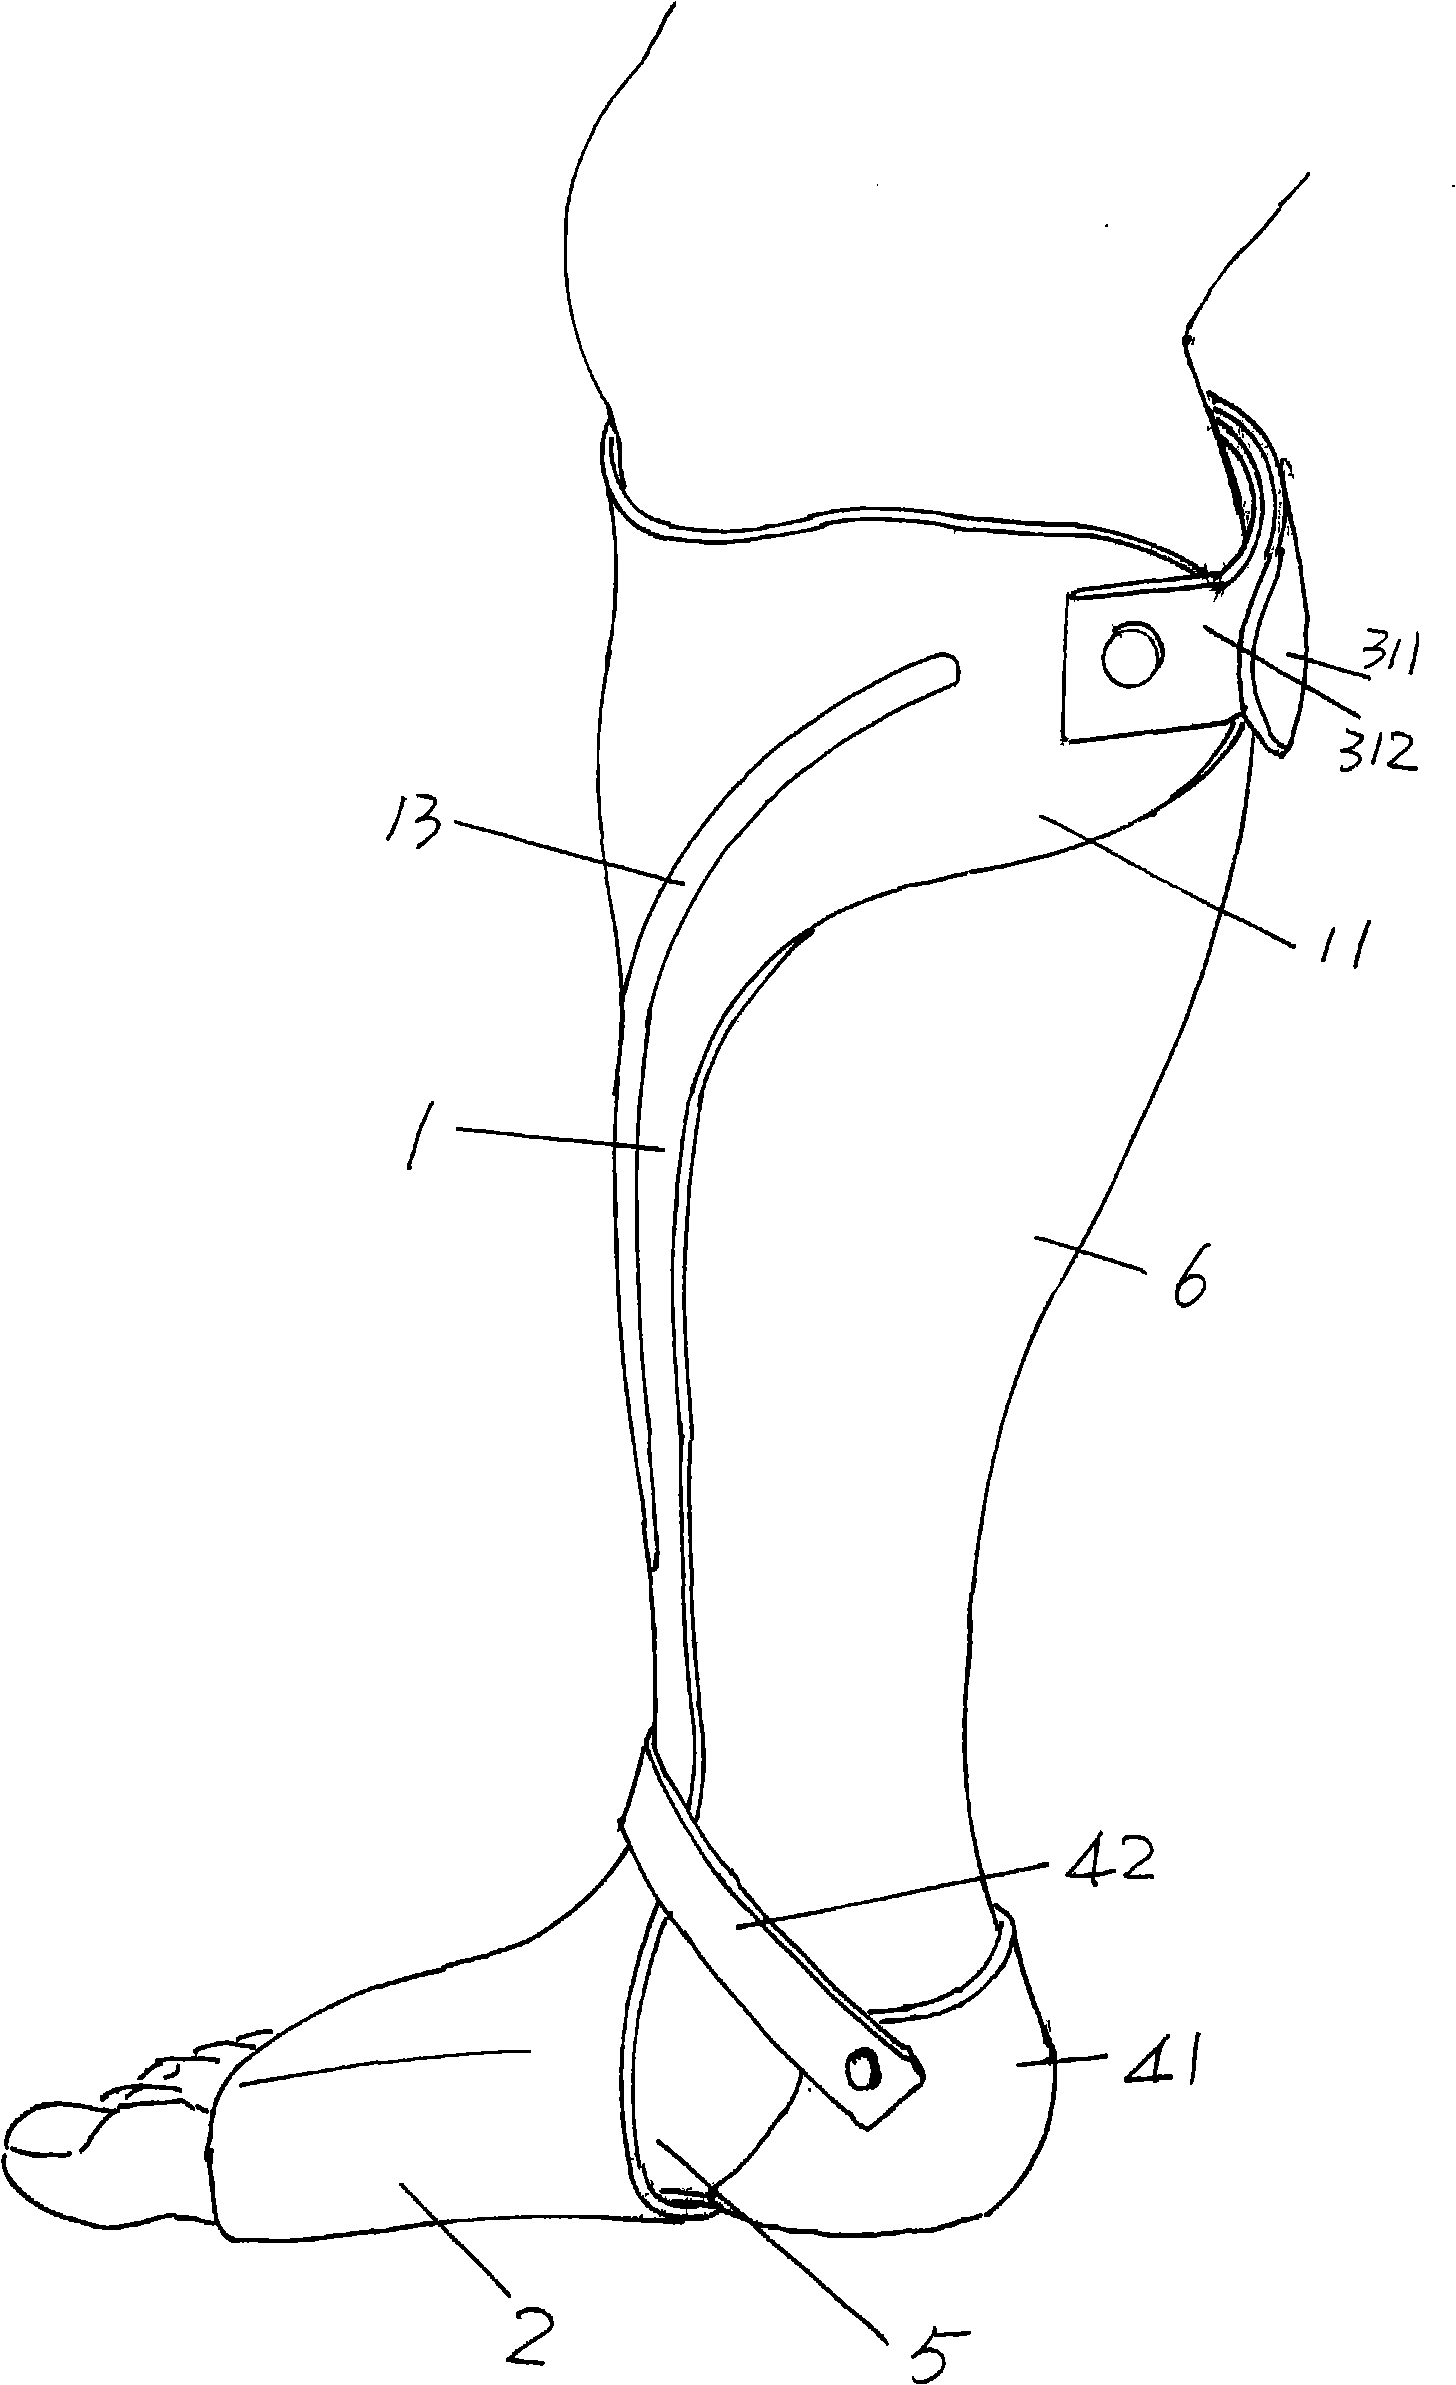 Forward ankle orthopedic instrument